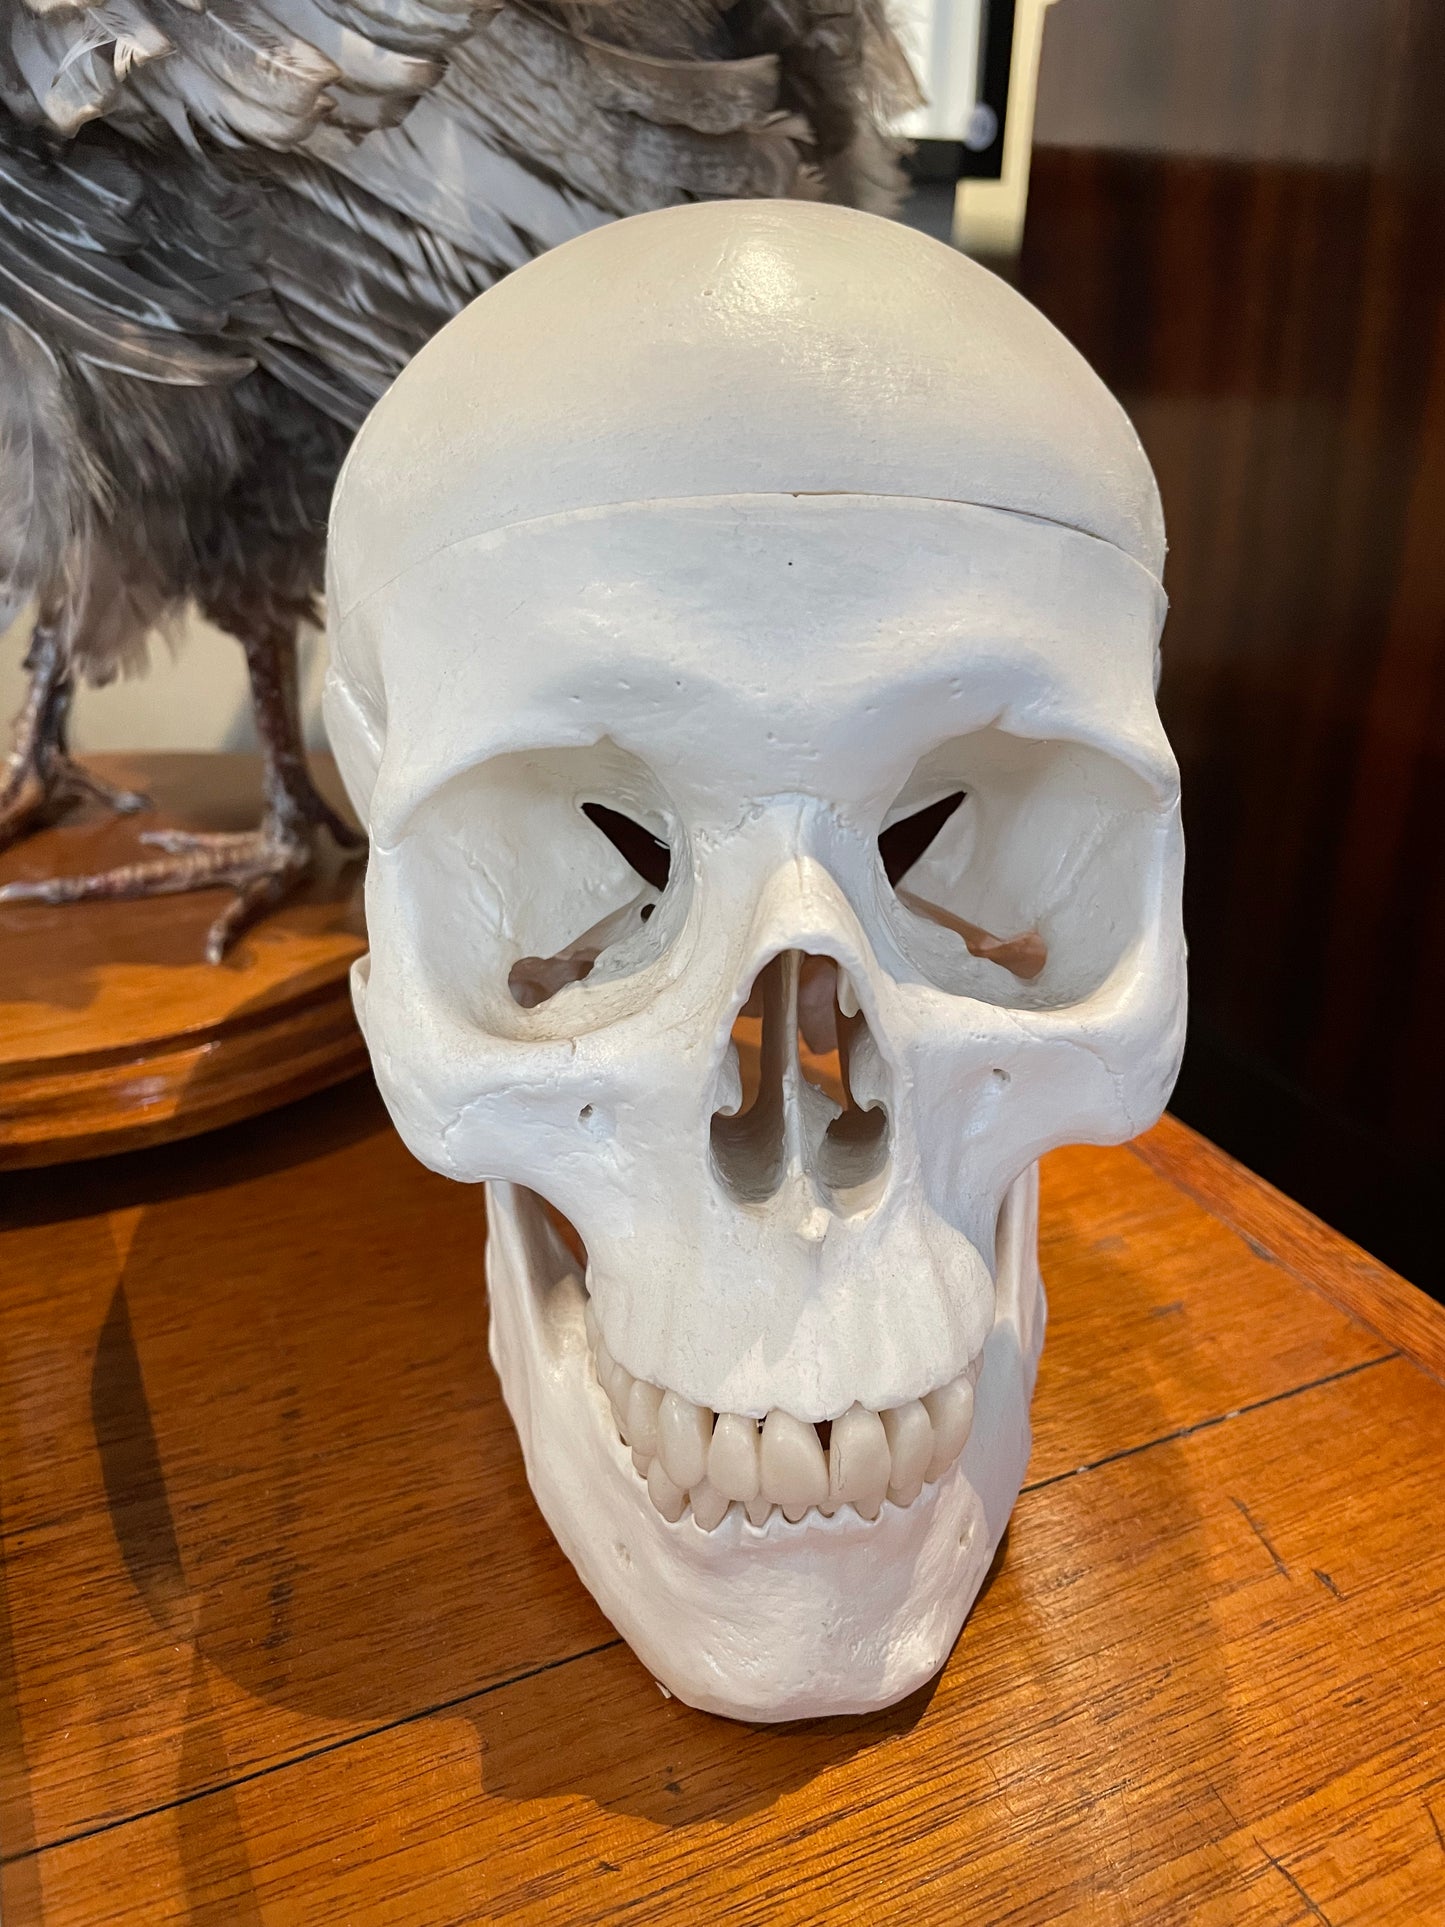 Replica Human Skull